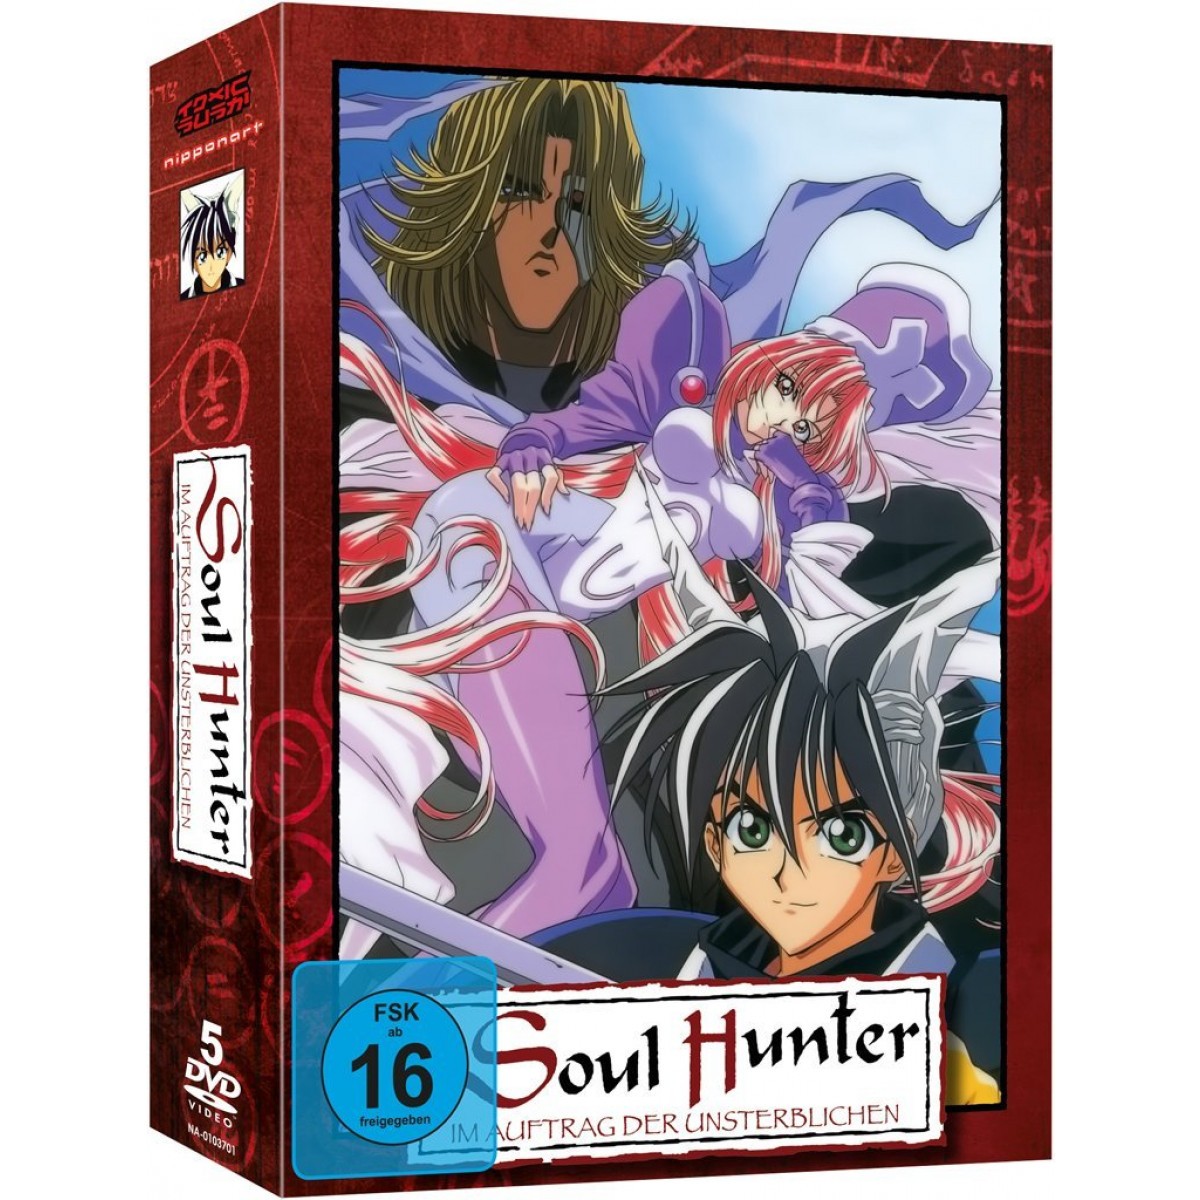 Soul Hunter - Gesamtausgabe DVD - nipponart Anime & Manga Shop